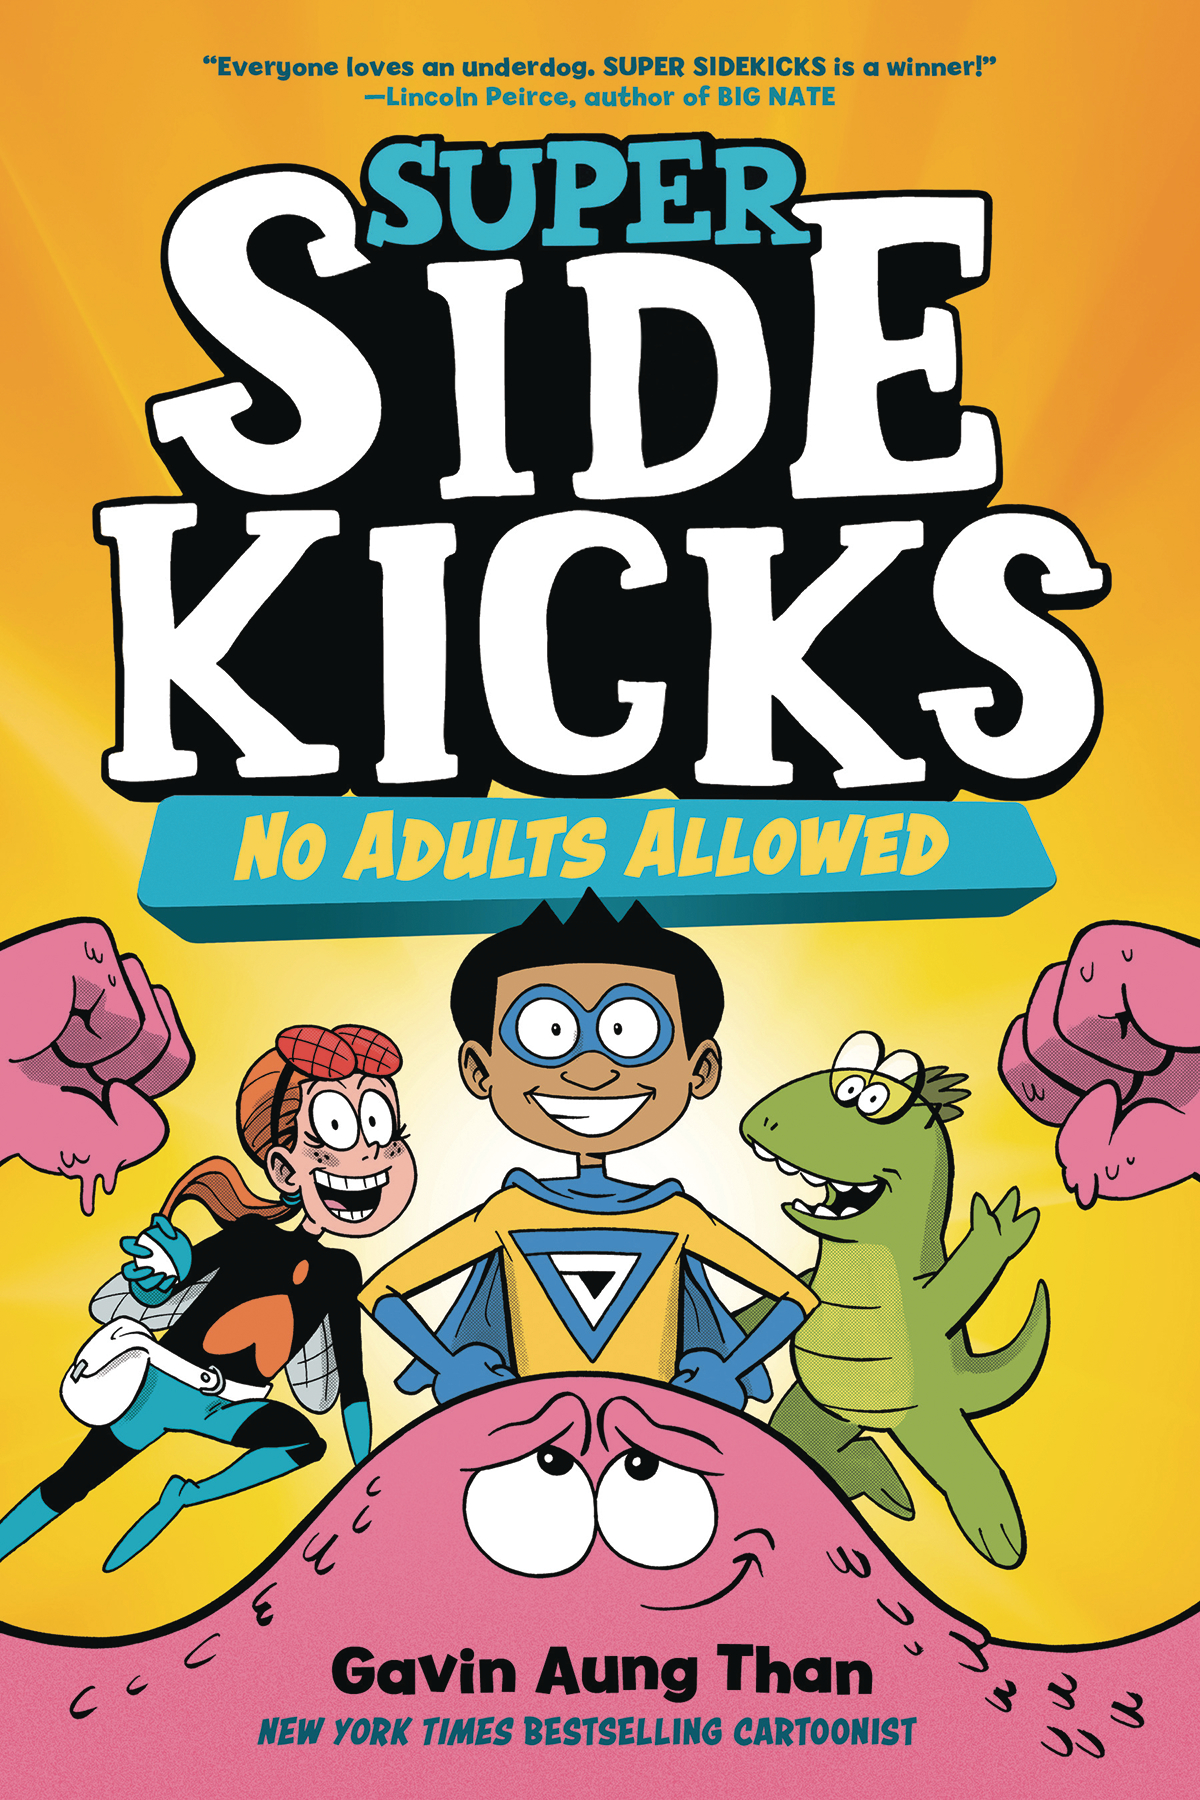 Super Sidekicks Hardcover Graphic Novel Volume 1 No Adults Allowed